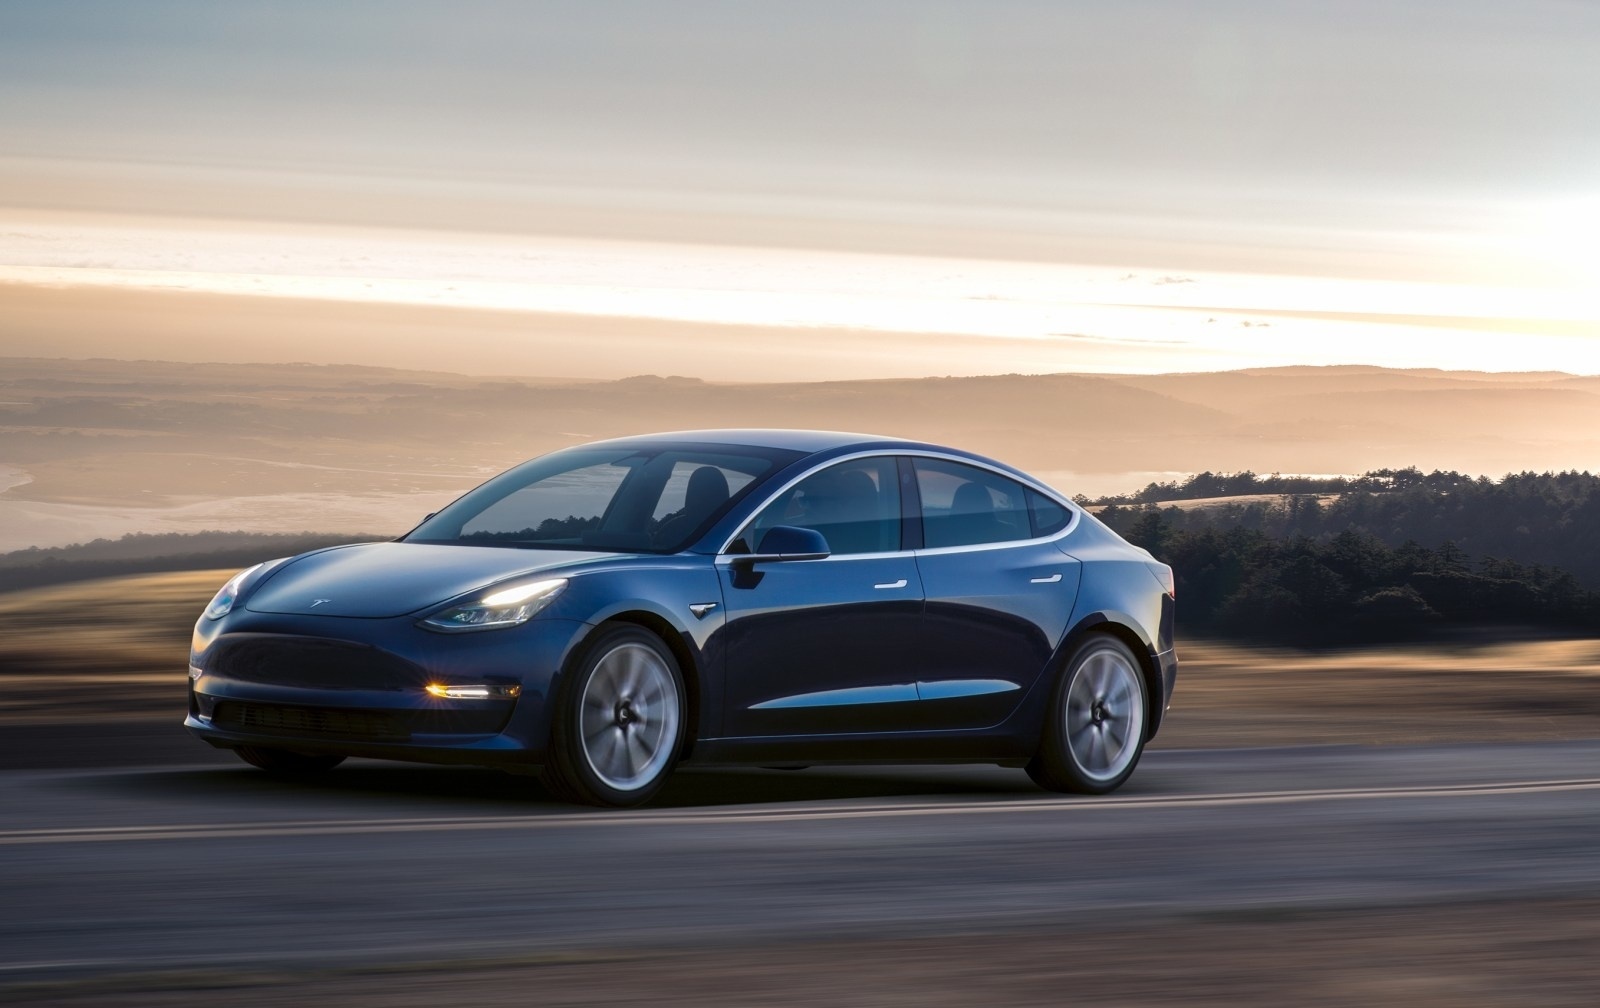 Tesla is still struggling to mass produce the Model 3